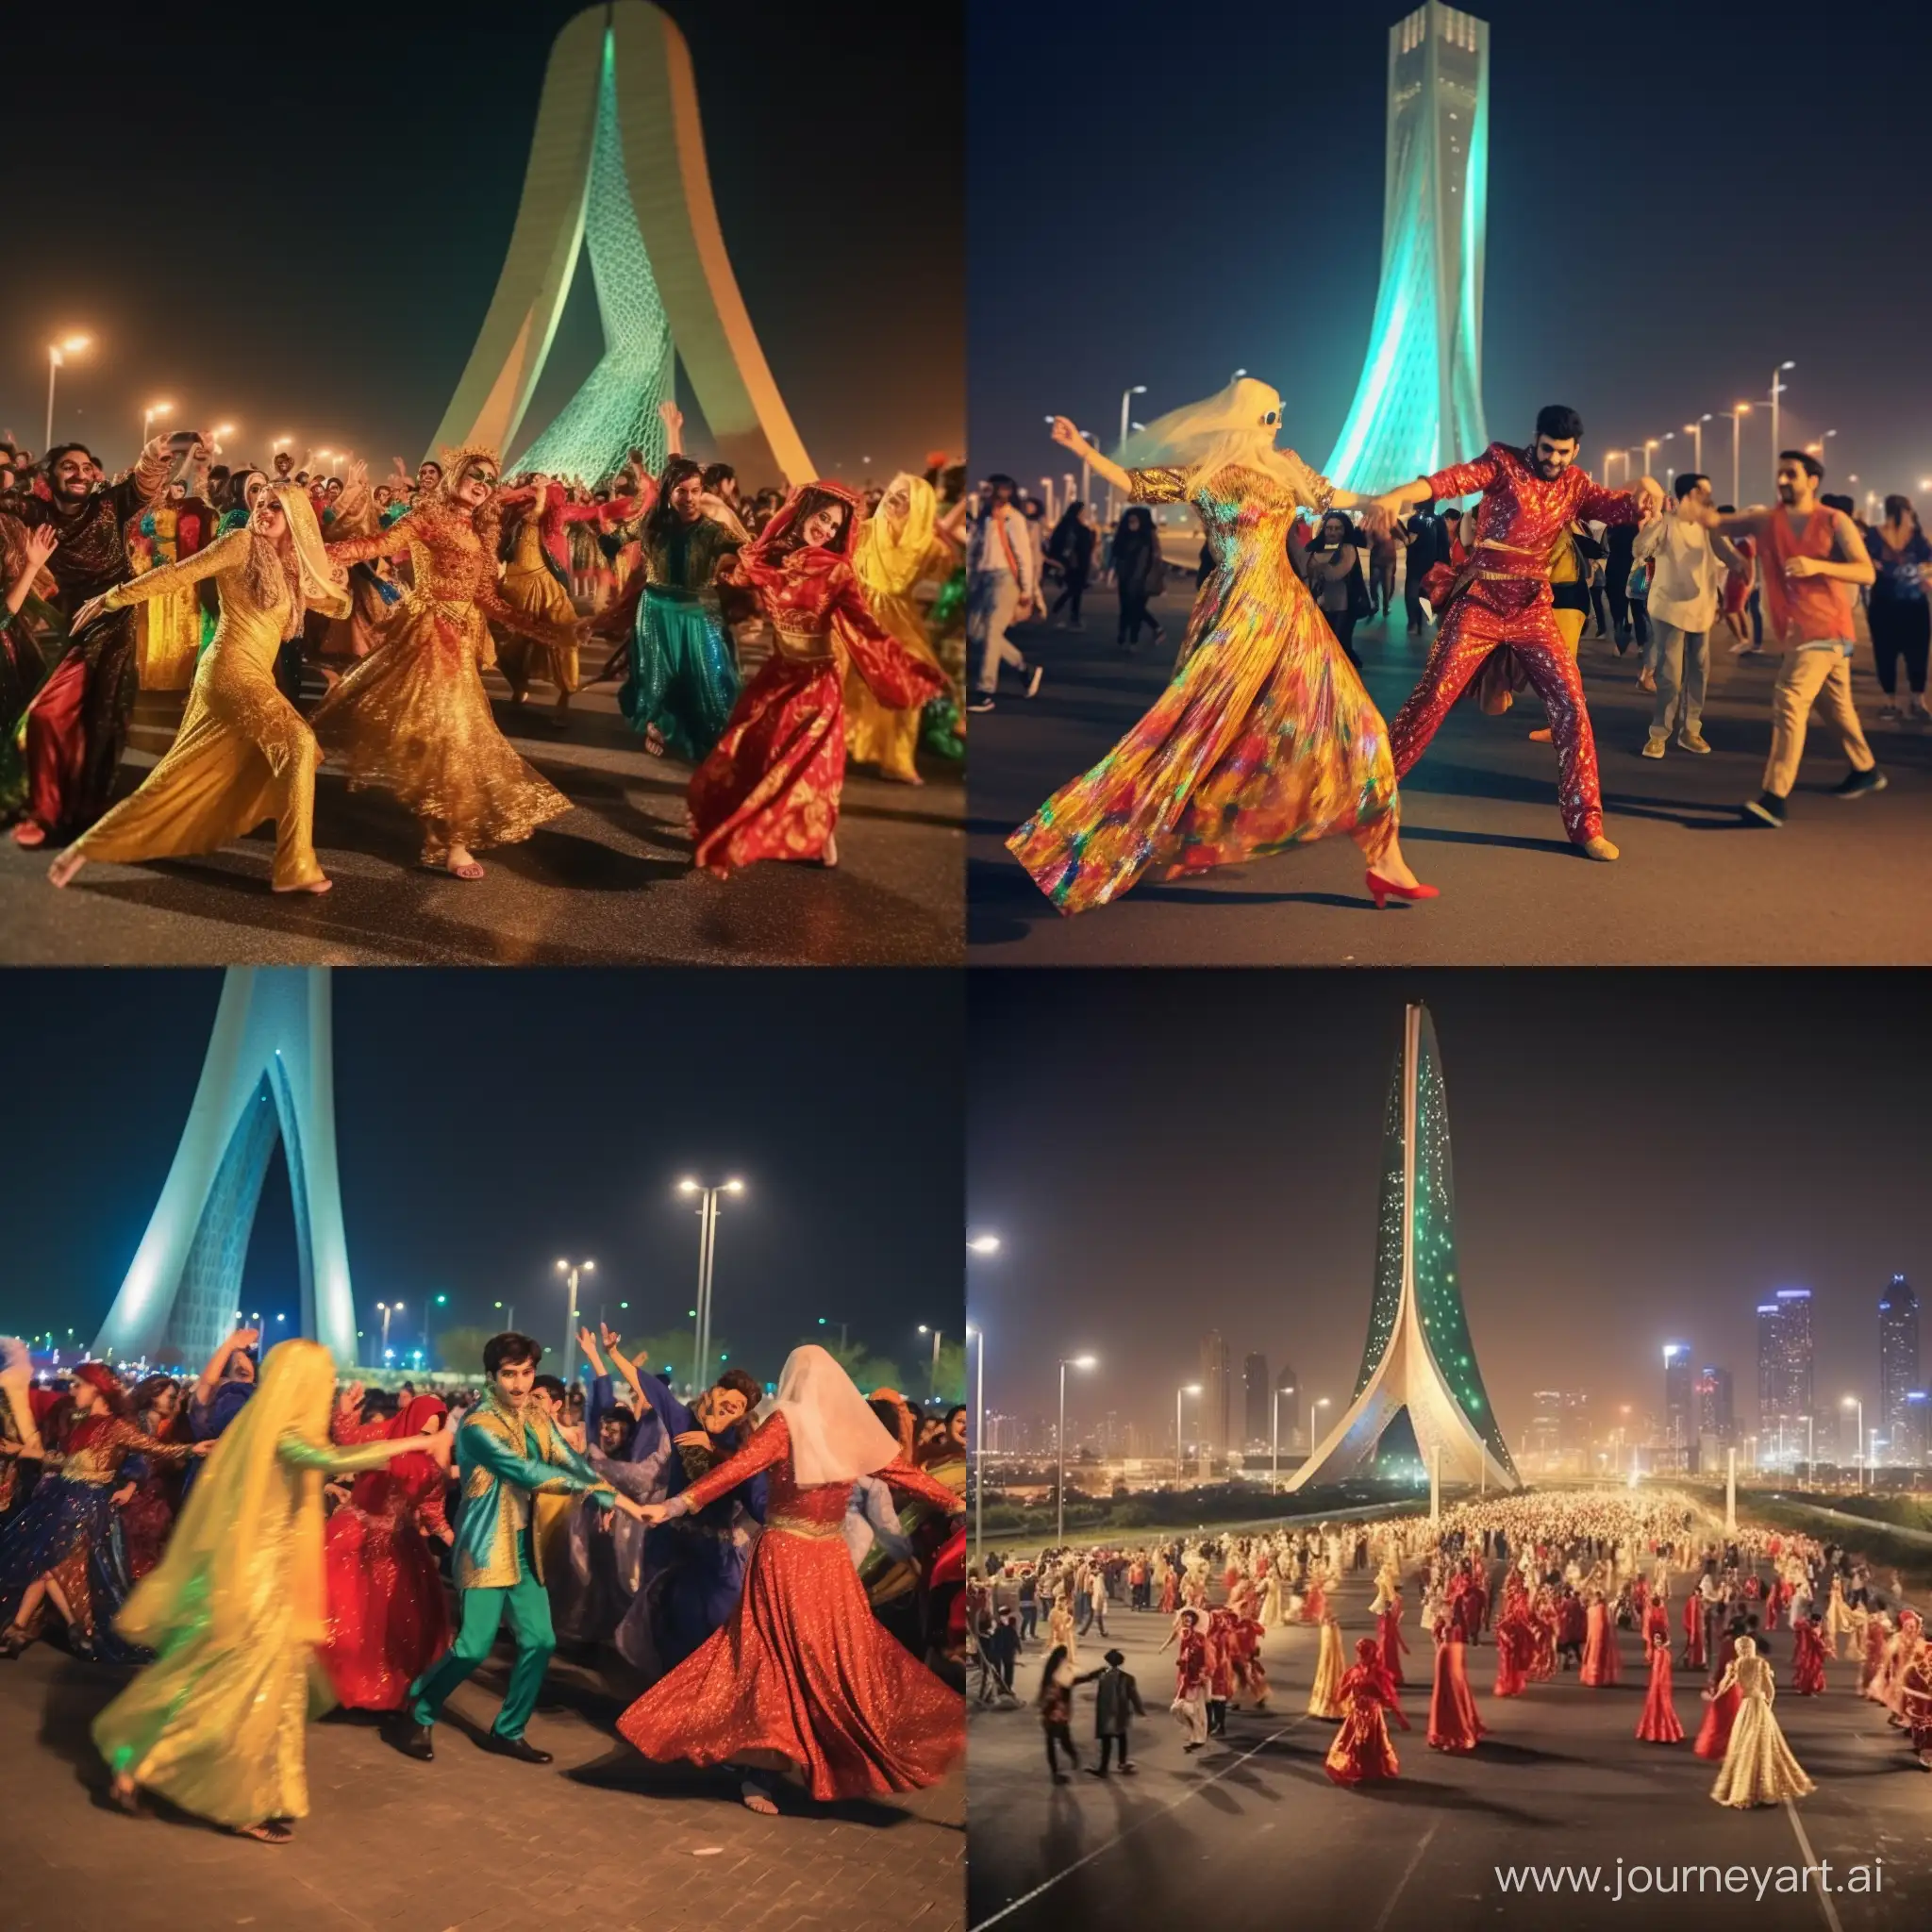 Festive-Christmas-Dance-Party-at-Tehran-Azadi-Tower-Hyperrealistic-8K-UHD-Celebration-in-Iran